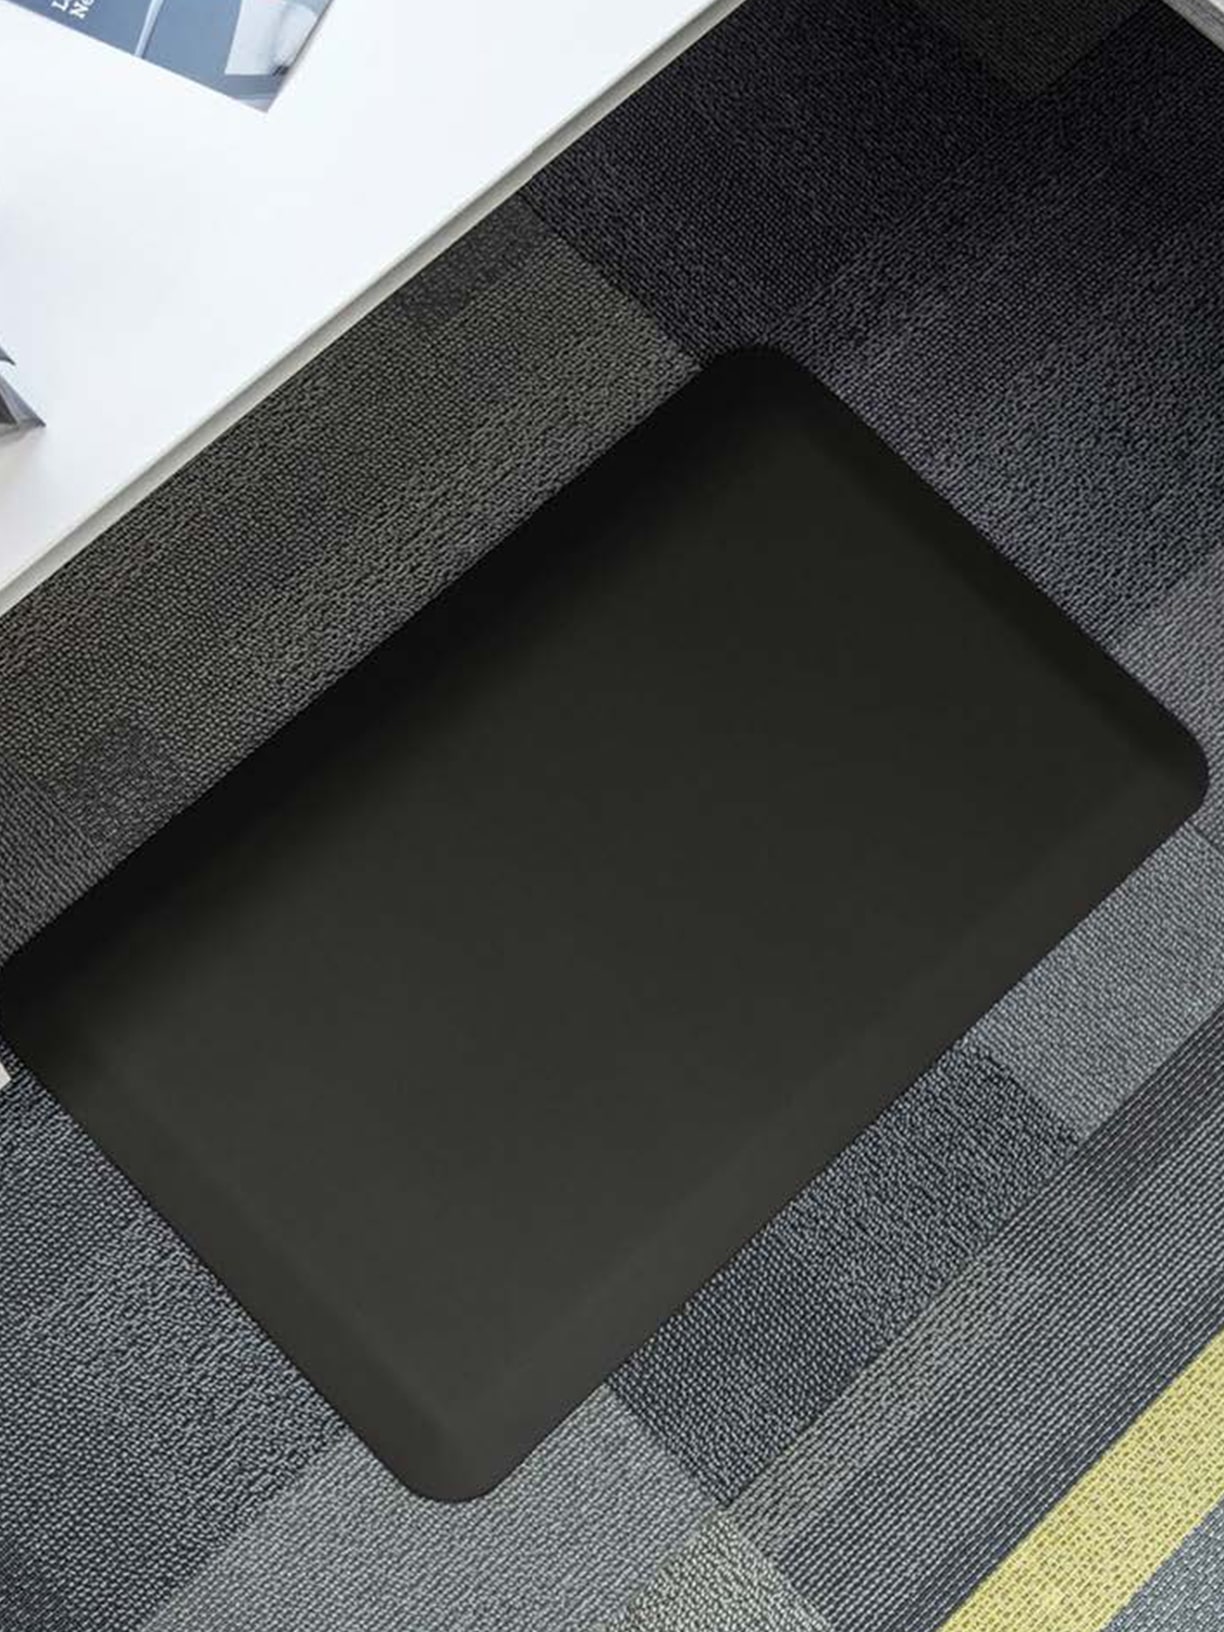 ErgoTech Products: Tehnoguma - Custom Floor mats 4